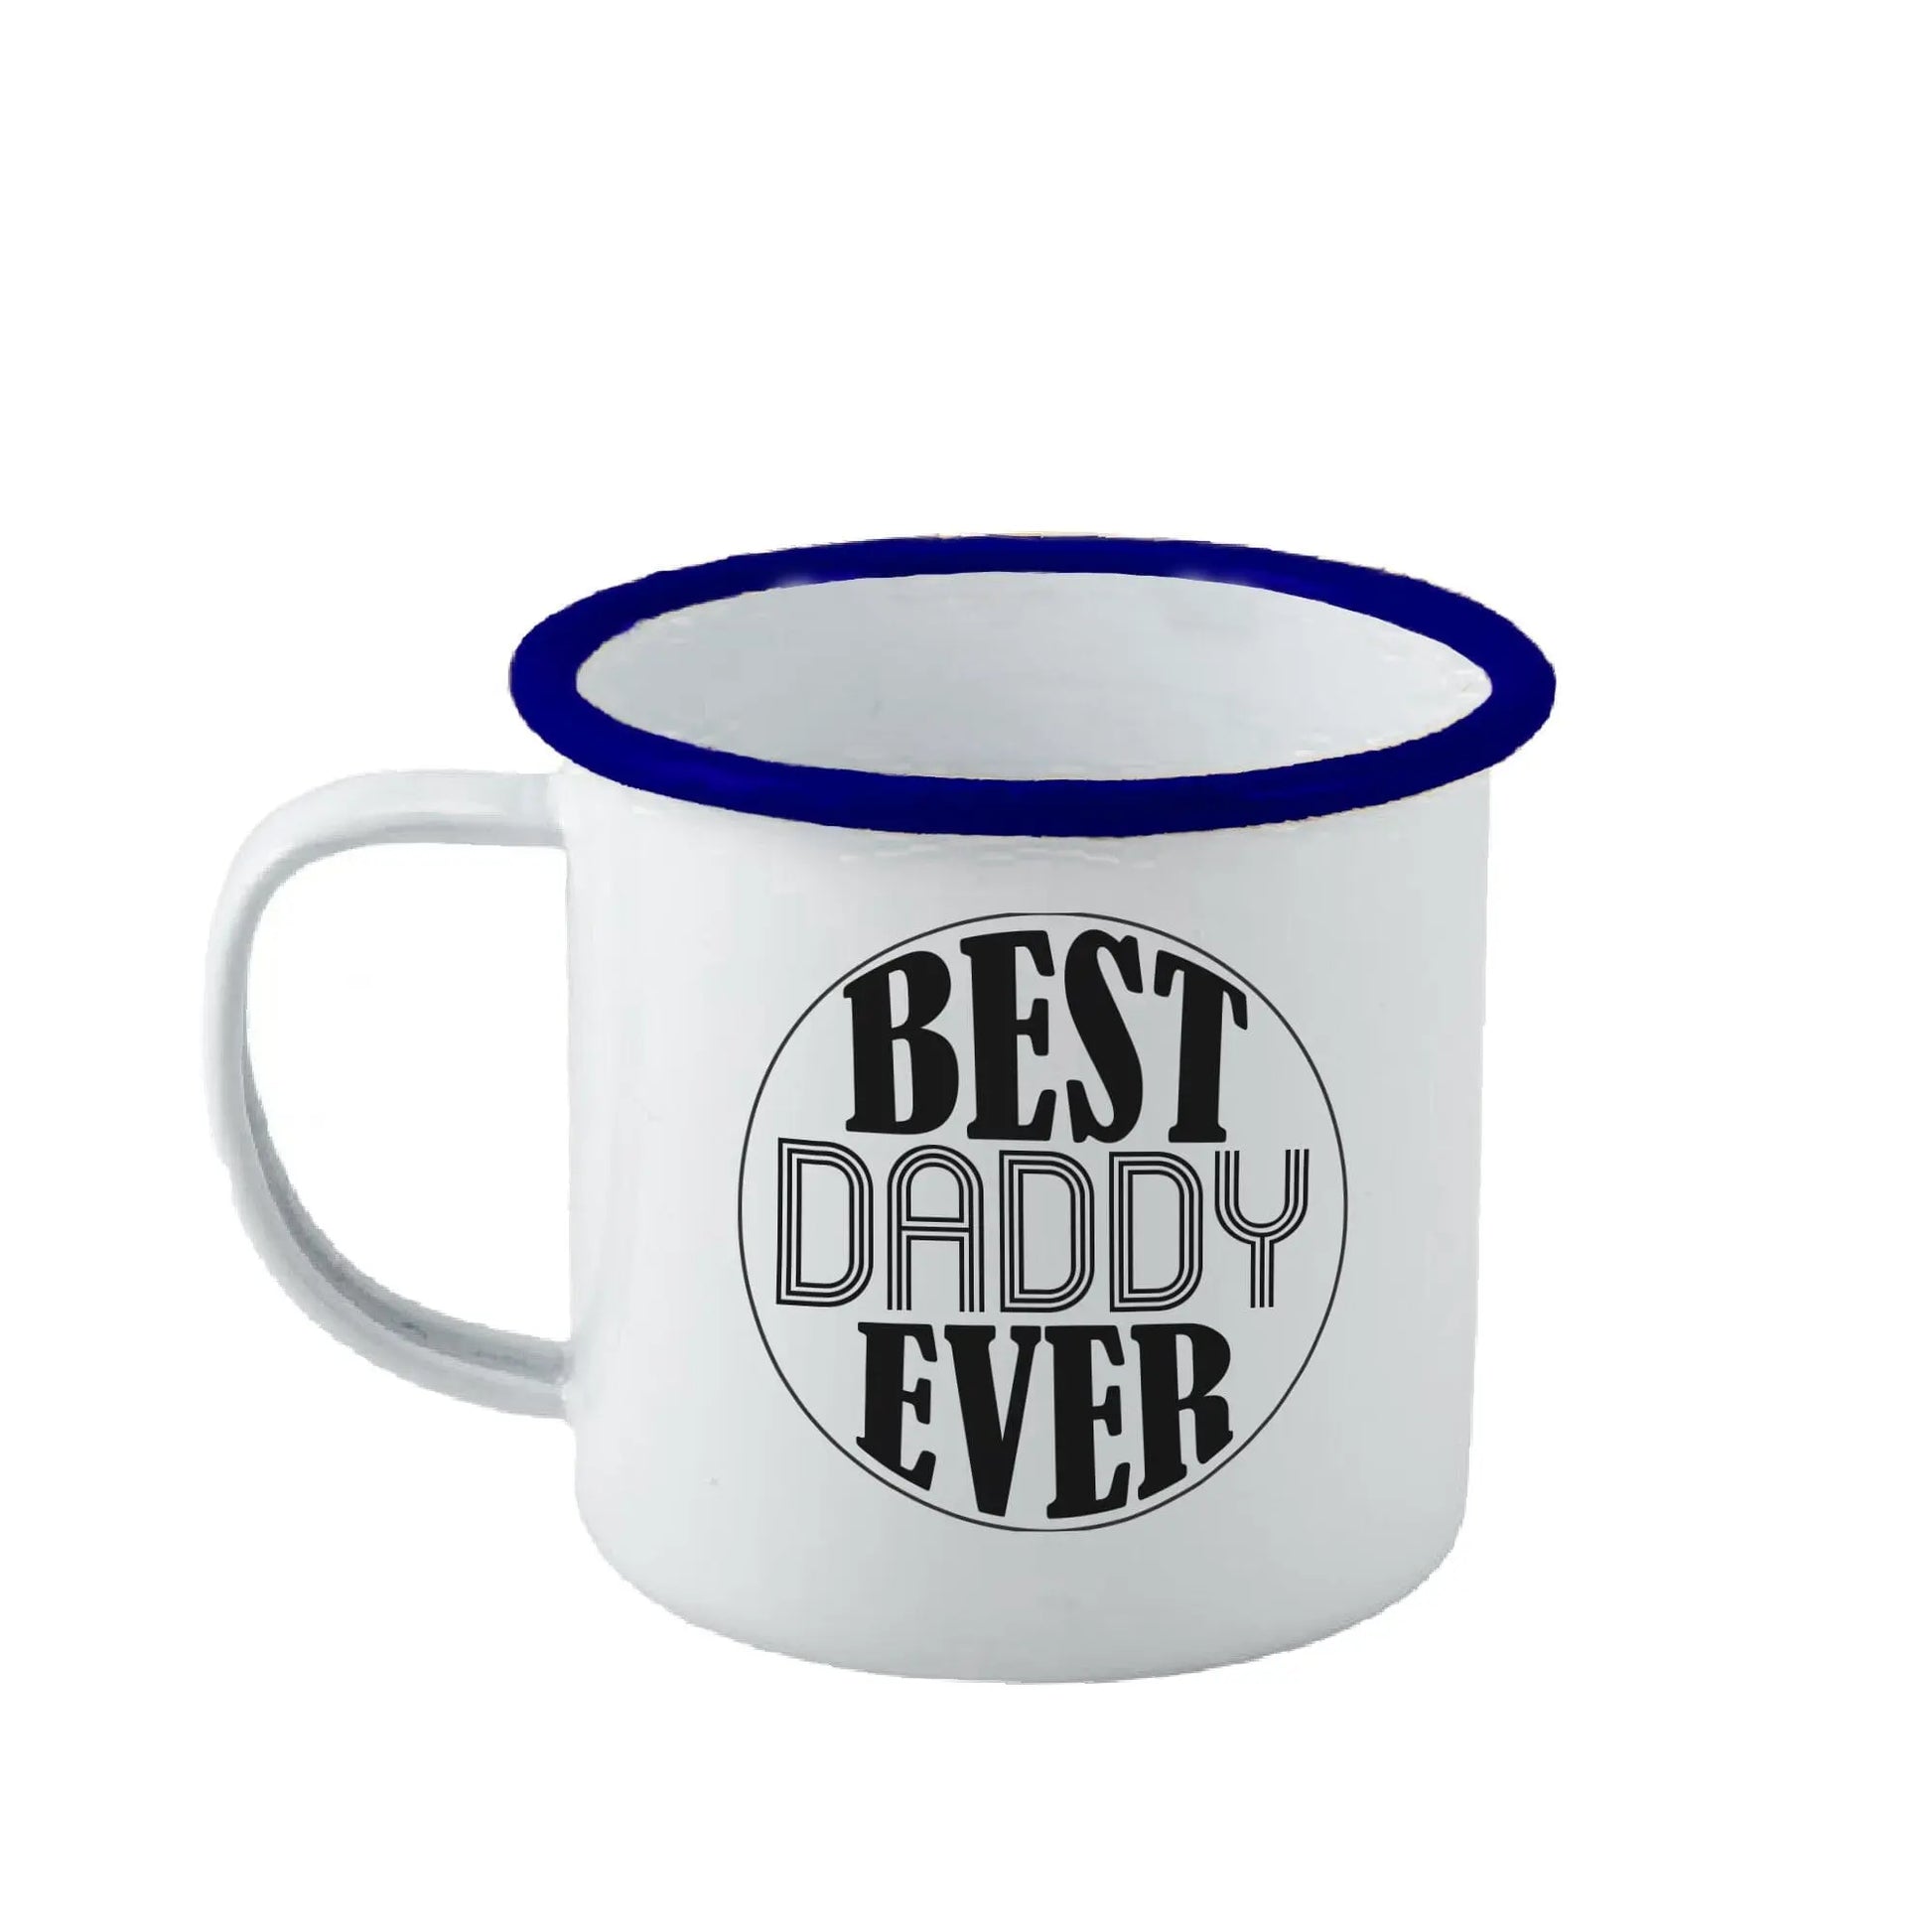 Personalised Best Daddy Ever Enamel Mug - Duncan Stewart 1978 Enamel-White-with-Blue-Rim Duncan Stewart 1978